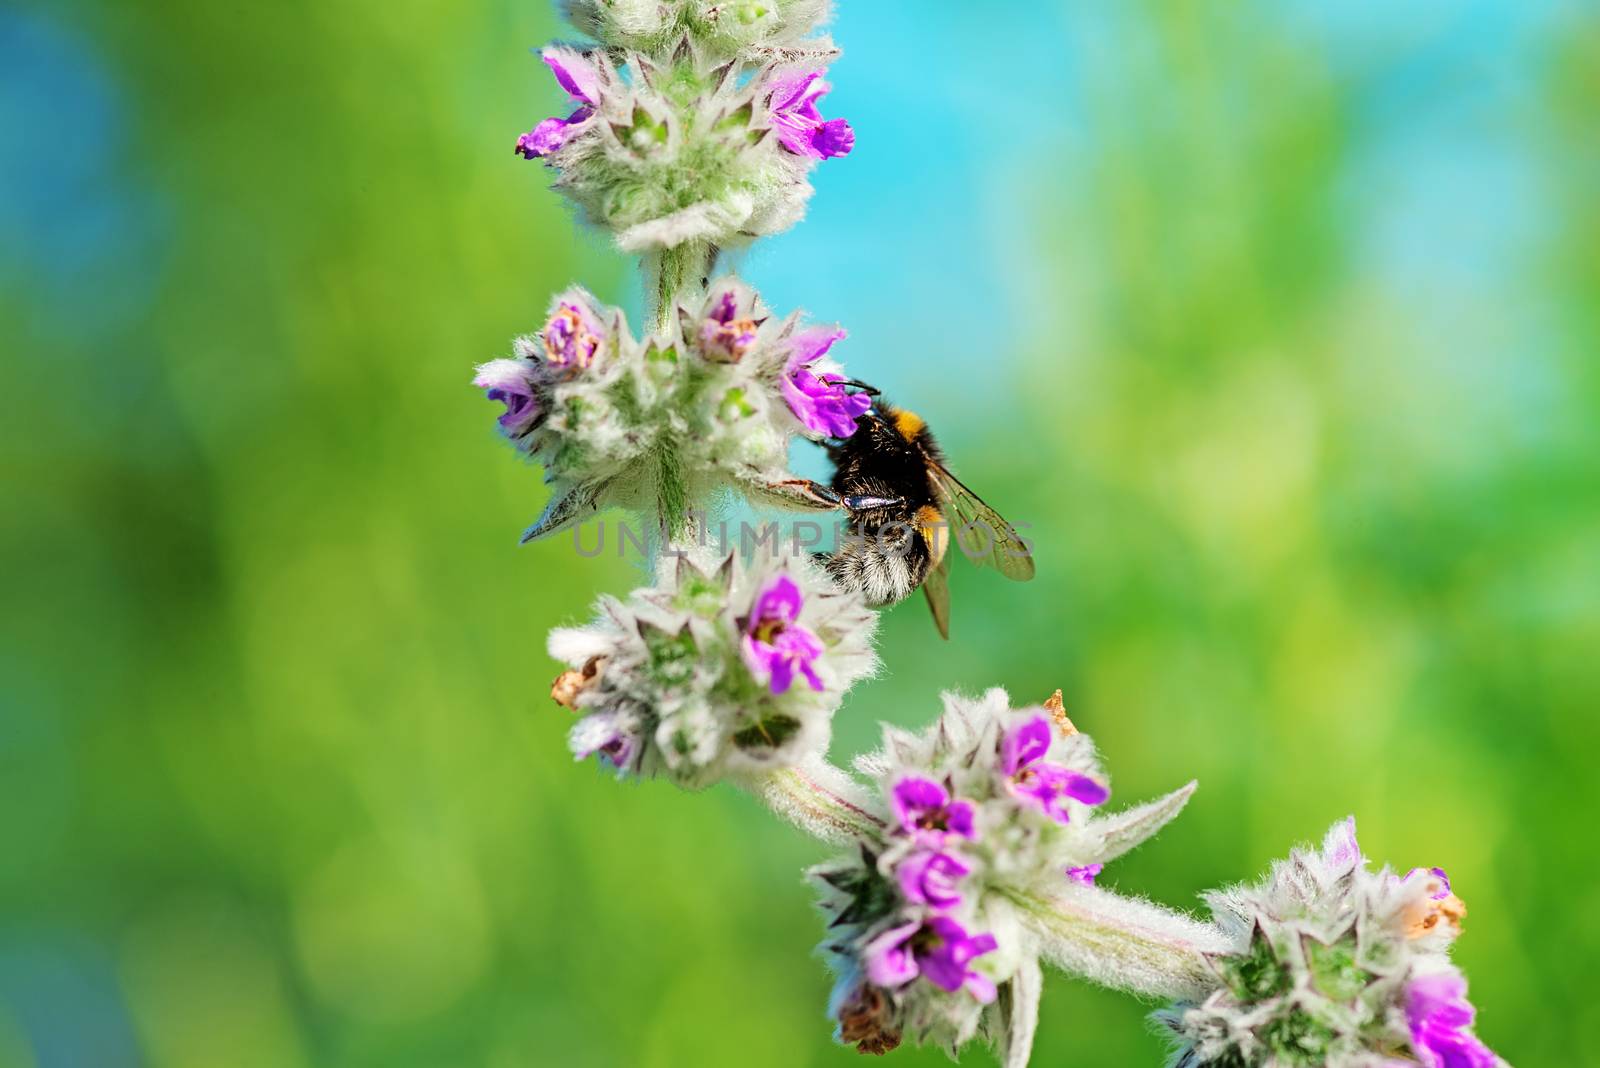 Bee on flower close up by Nanisimova